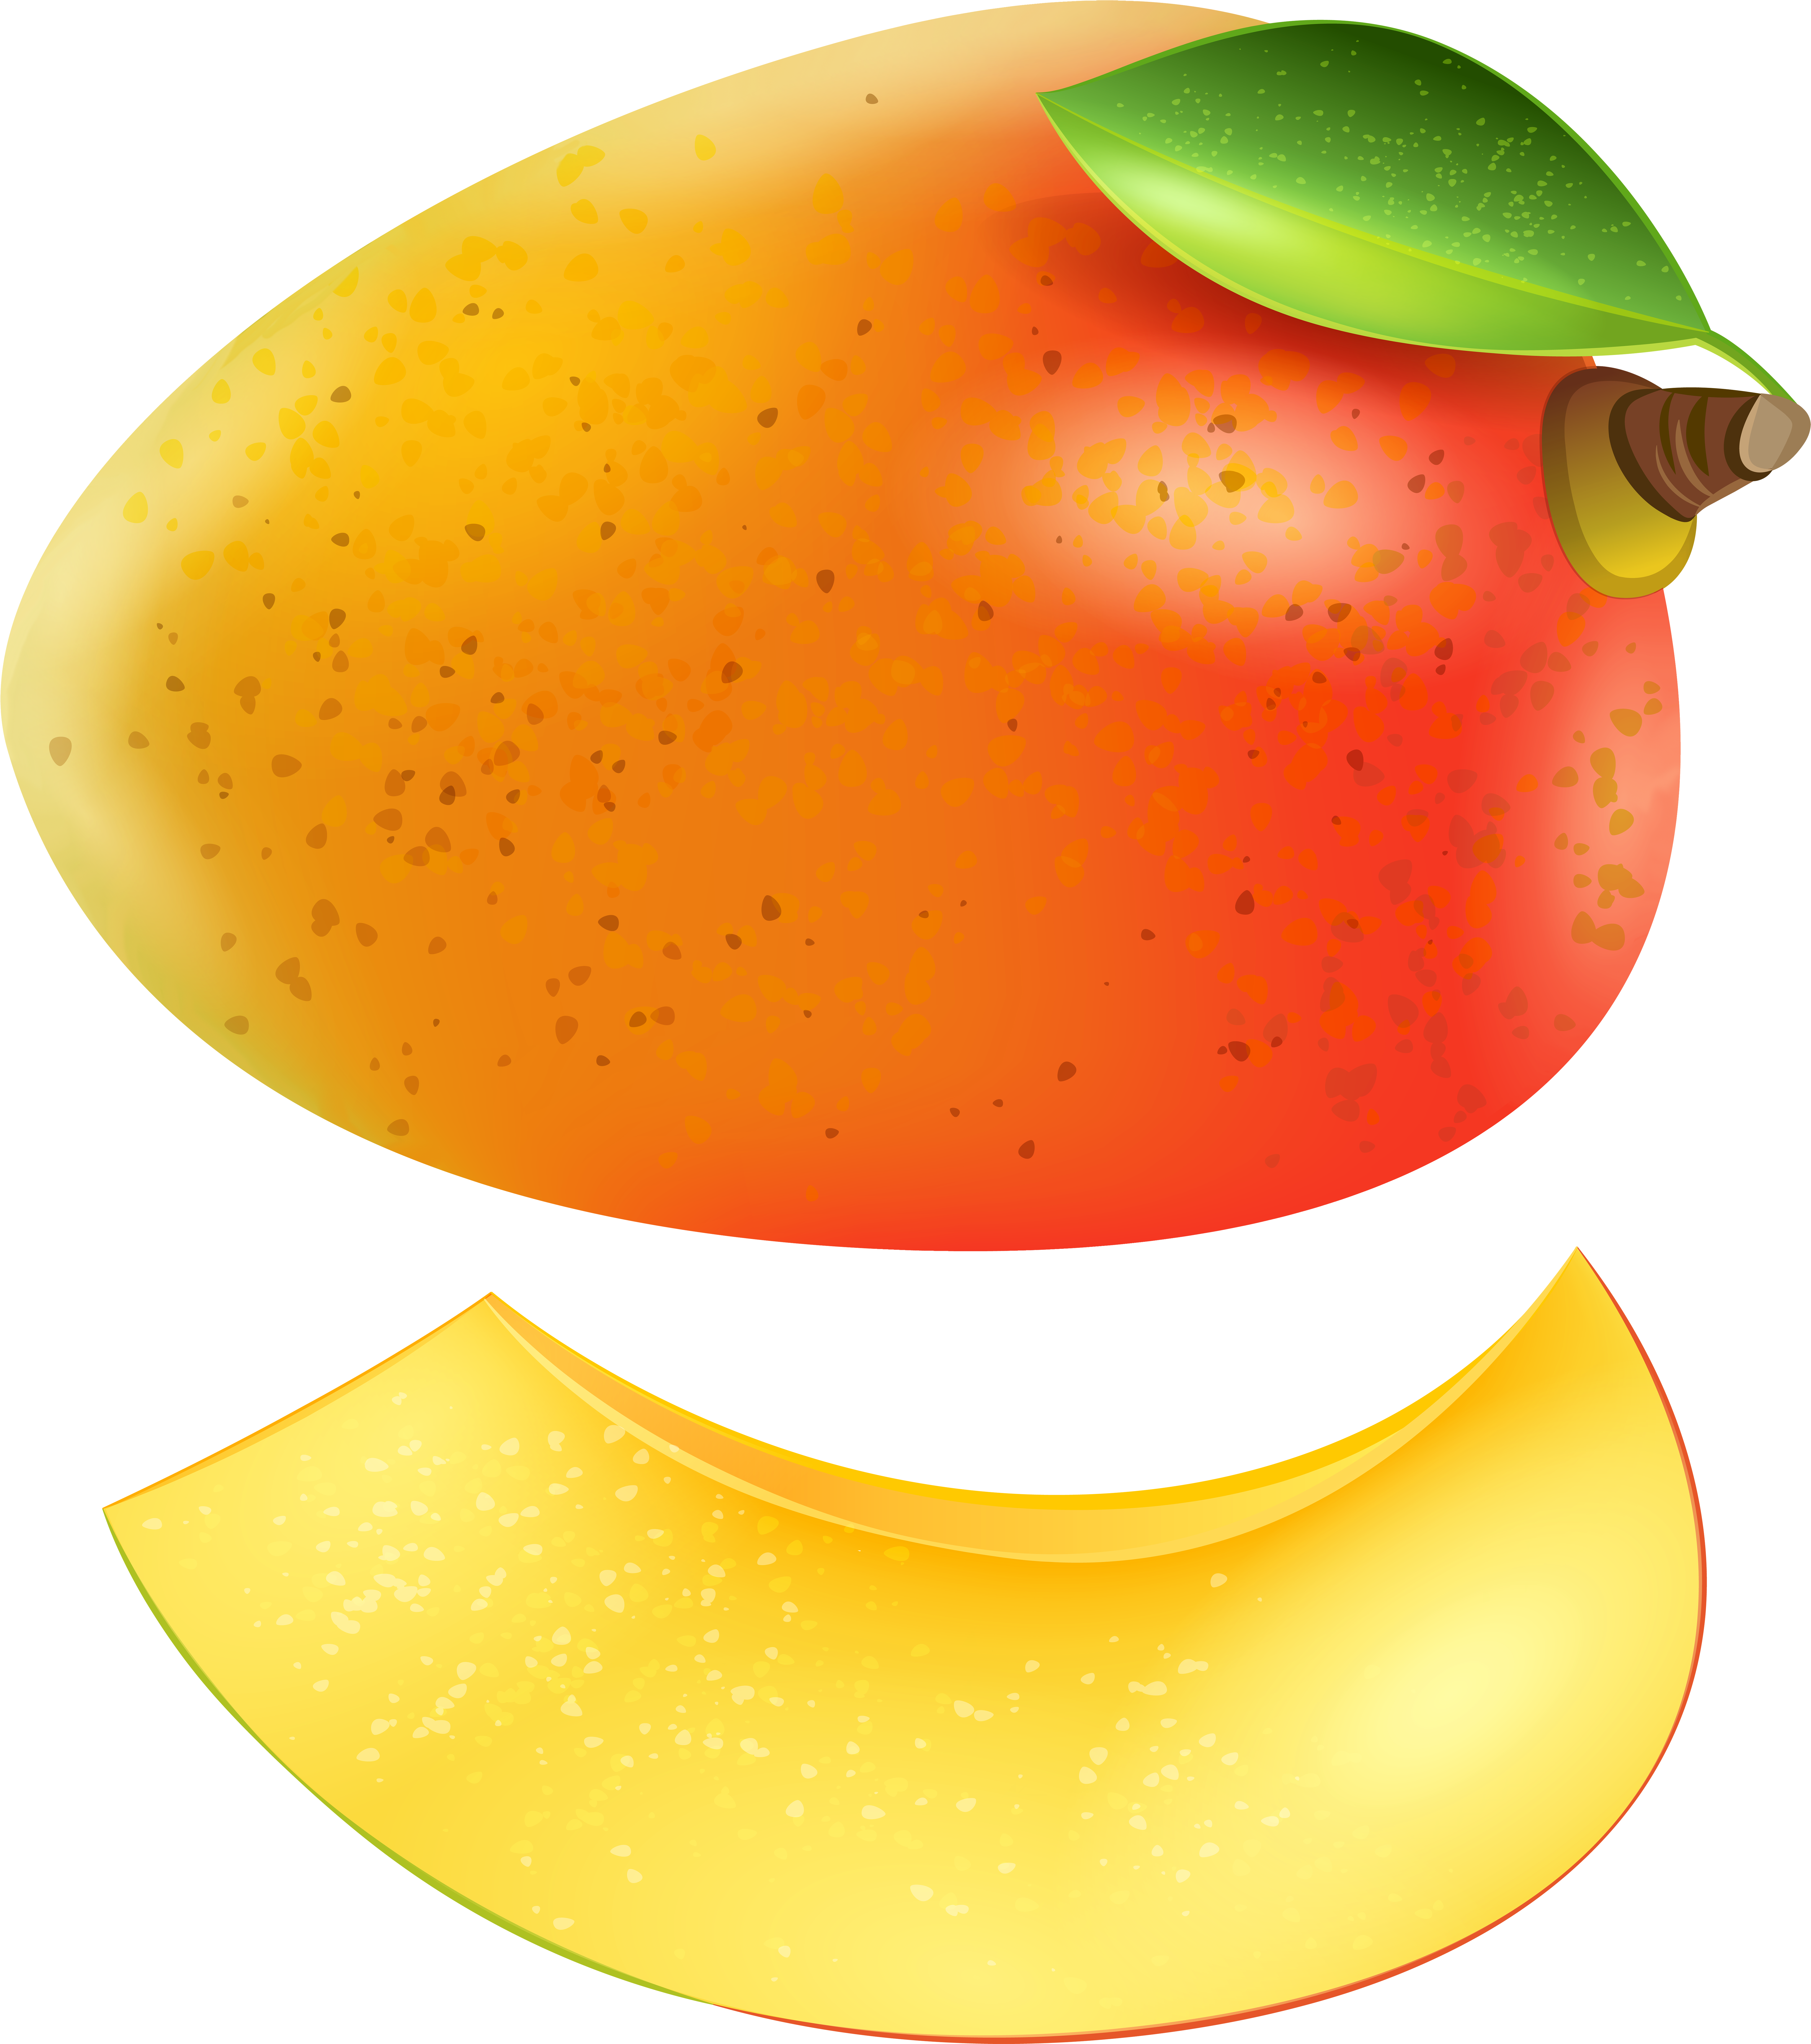 A Mango With A Green Leaf And A Slice Of Mango